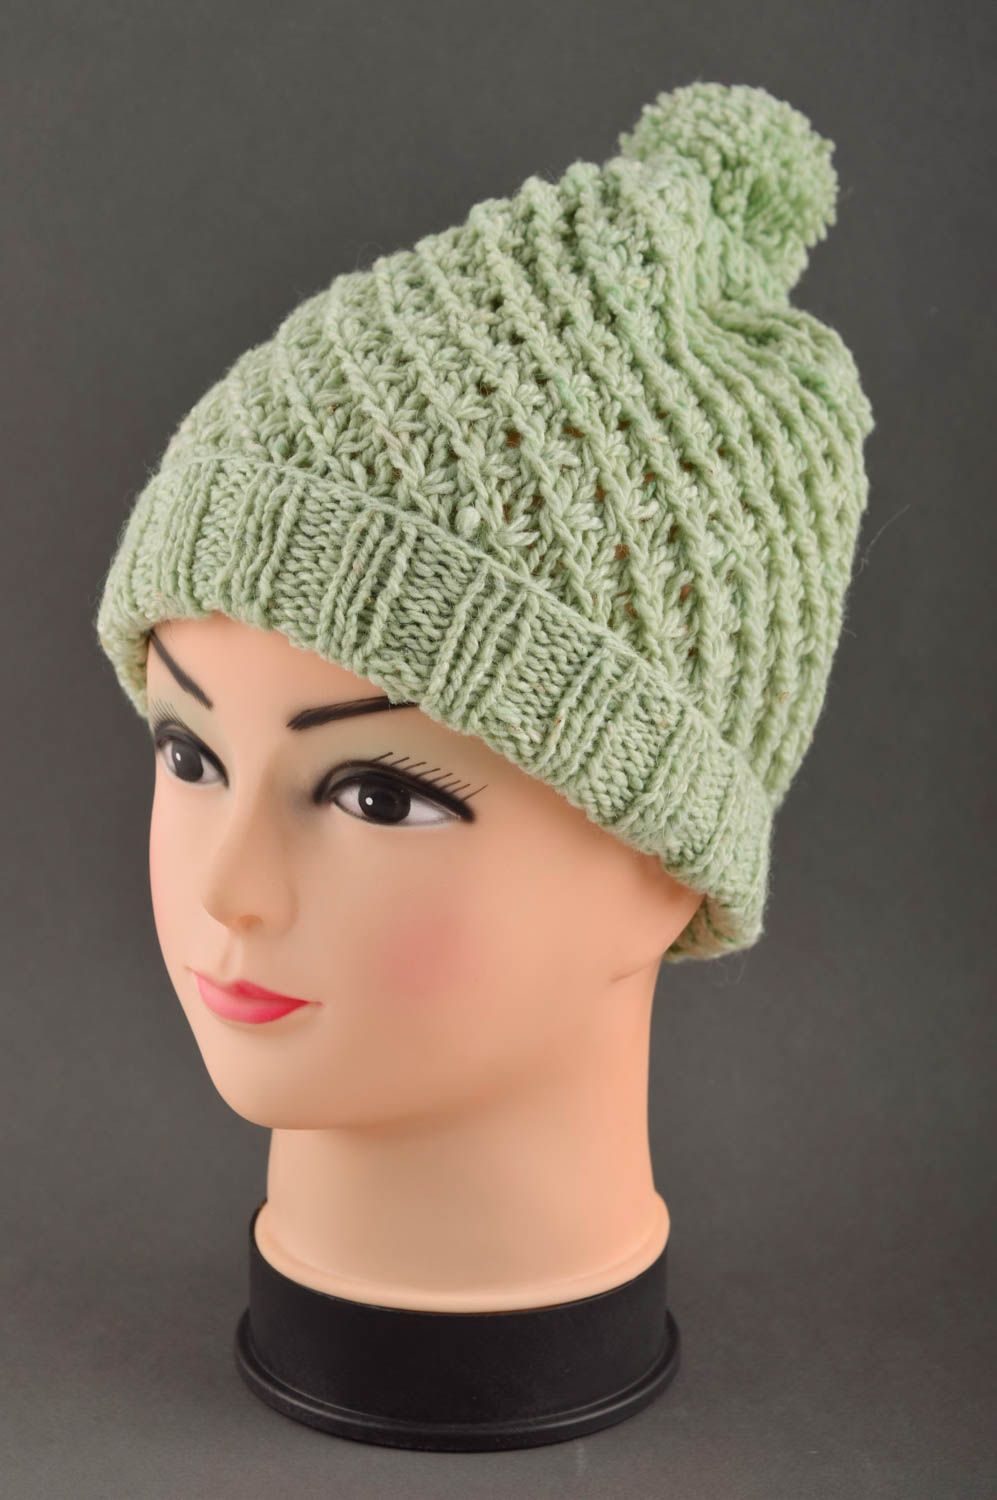 Handmade hat crocheted warm hat for winter unusual hat designer hat for girls photo 1